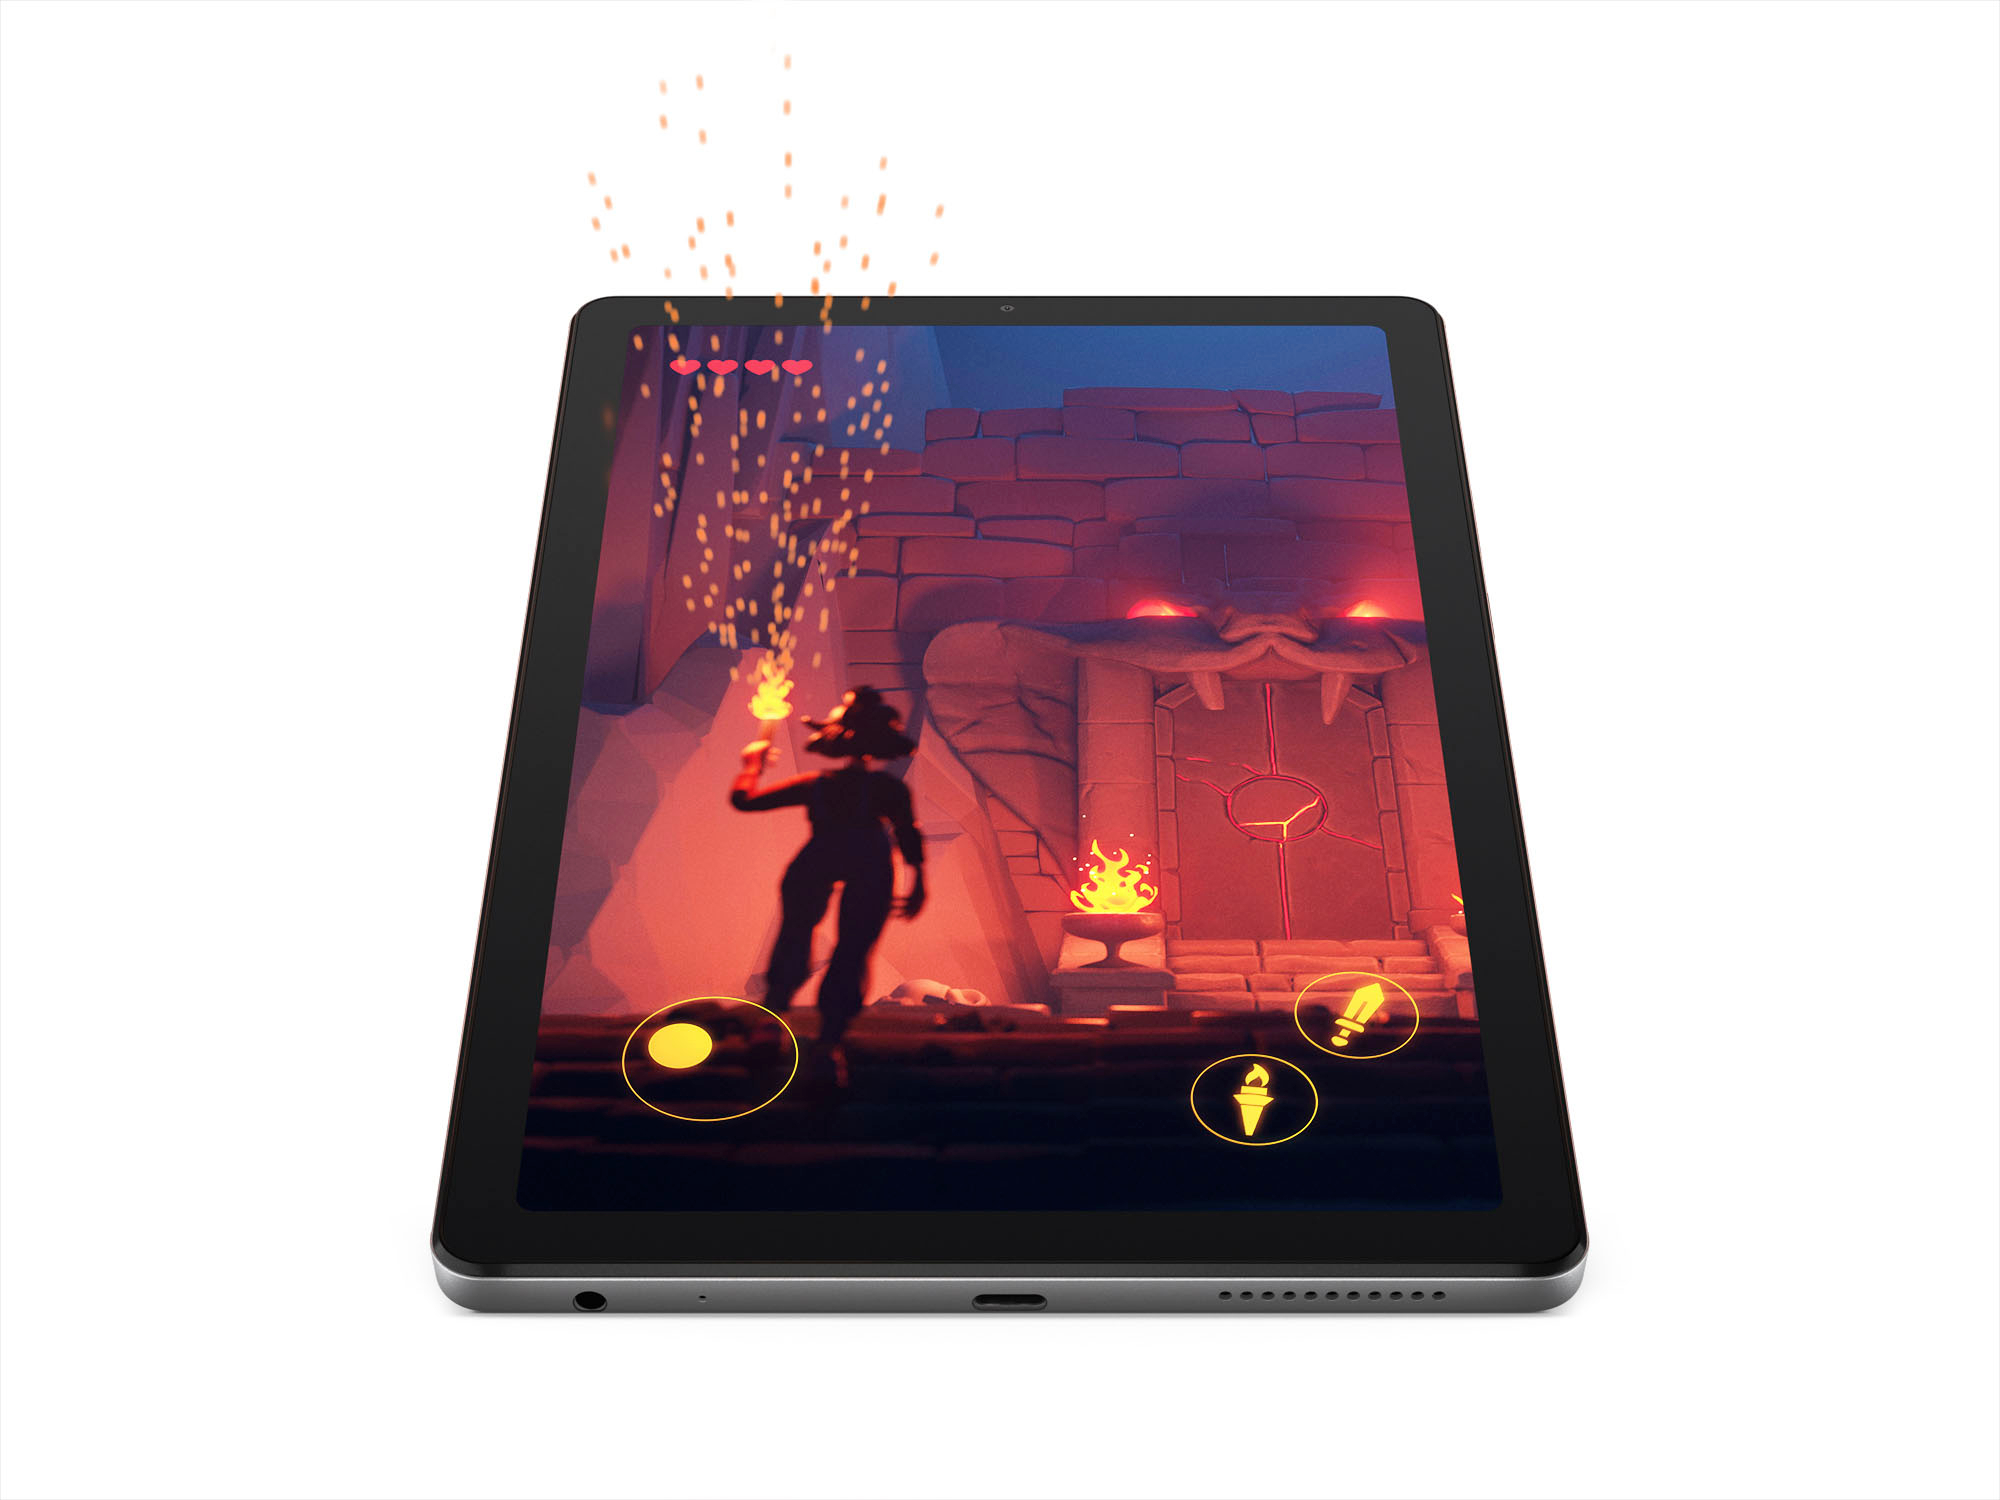 Lenovo Tab M9, 9″ MediaTek®-powered Android tablet